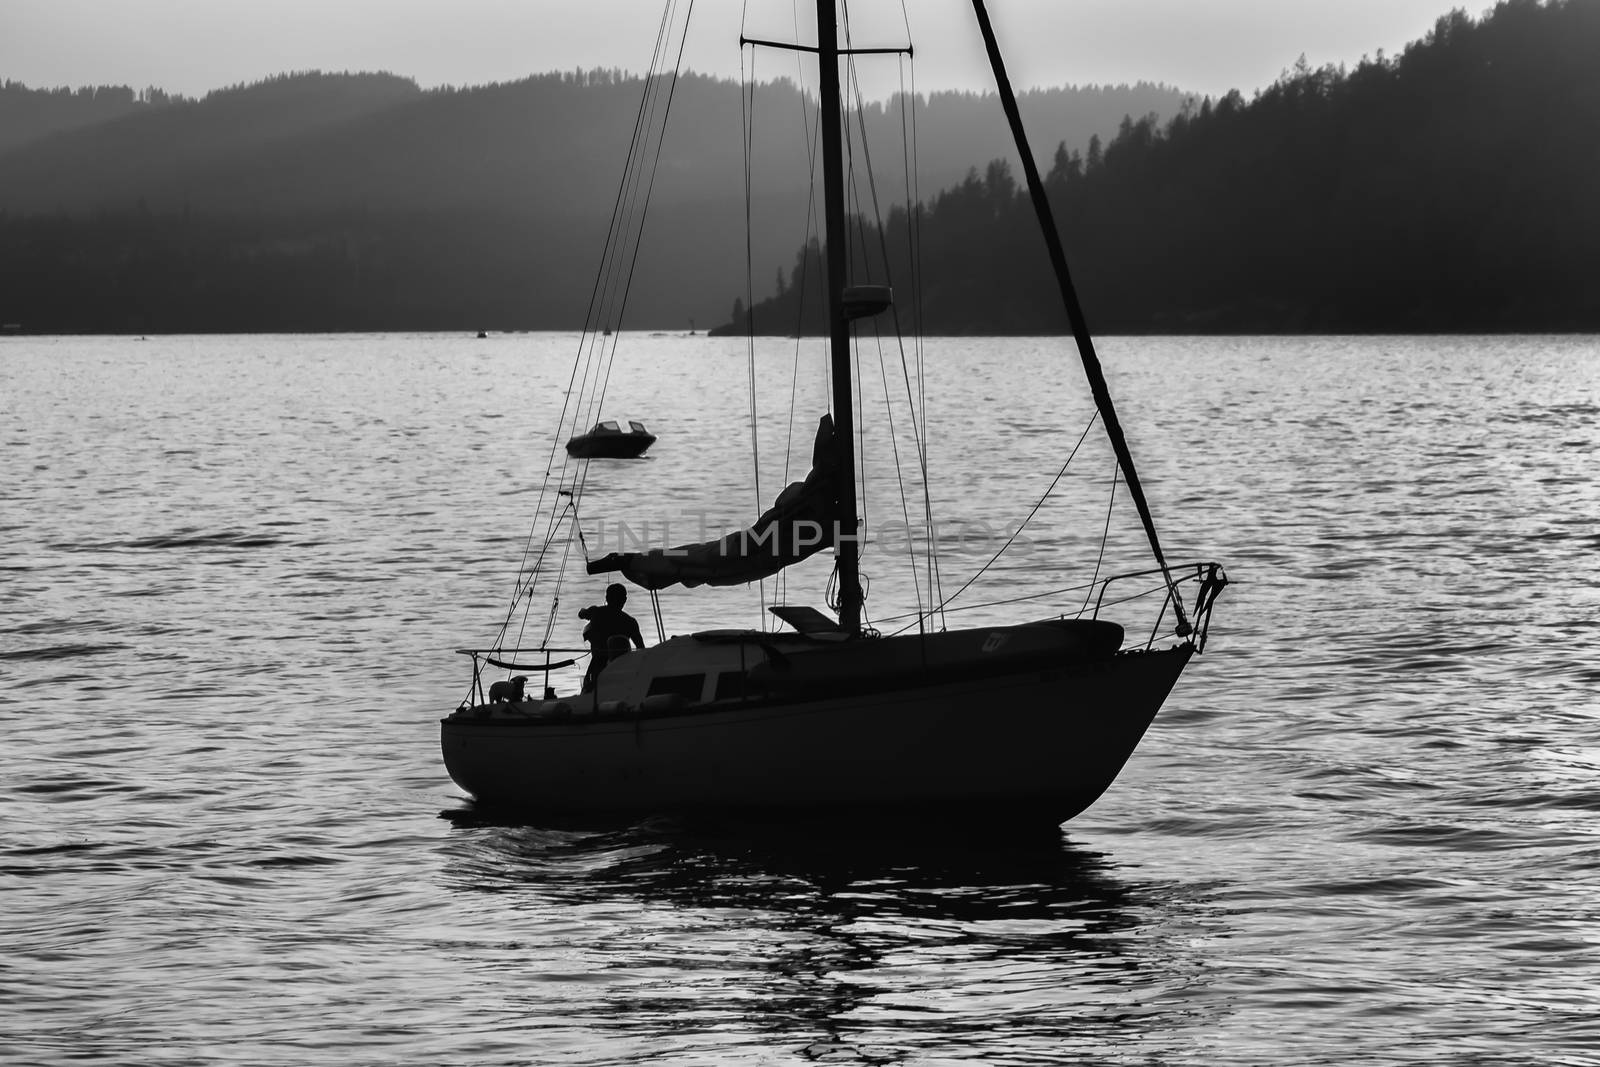 Sailing at Sunset in Idaho by teacherdad48@yahoo.com